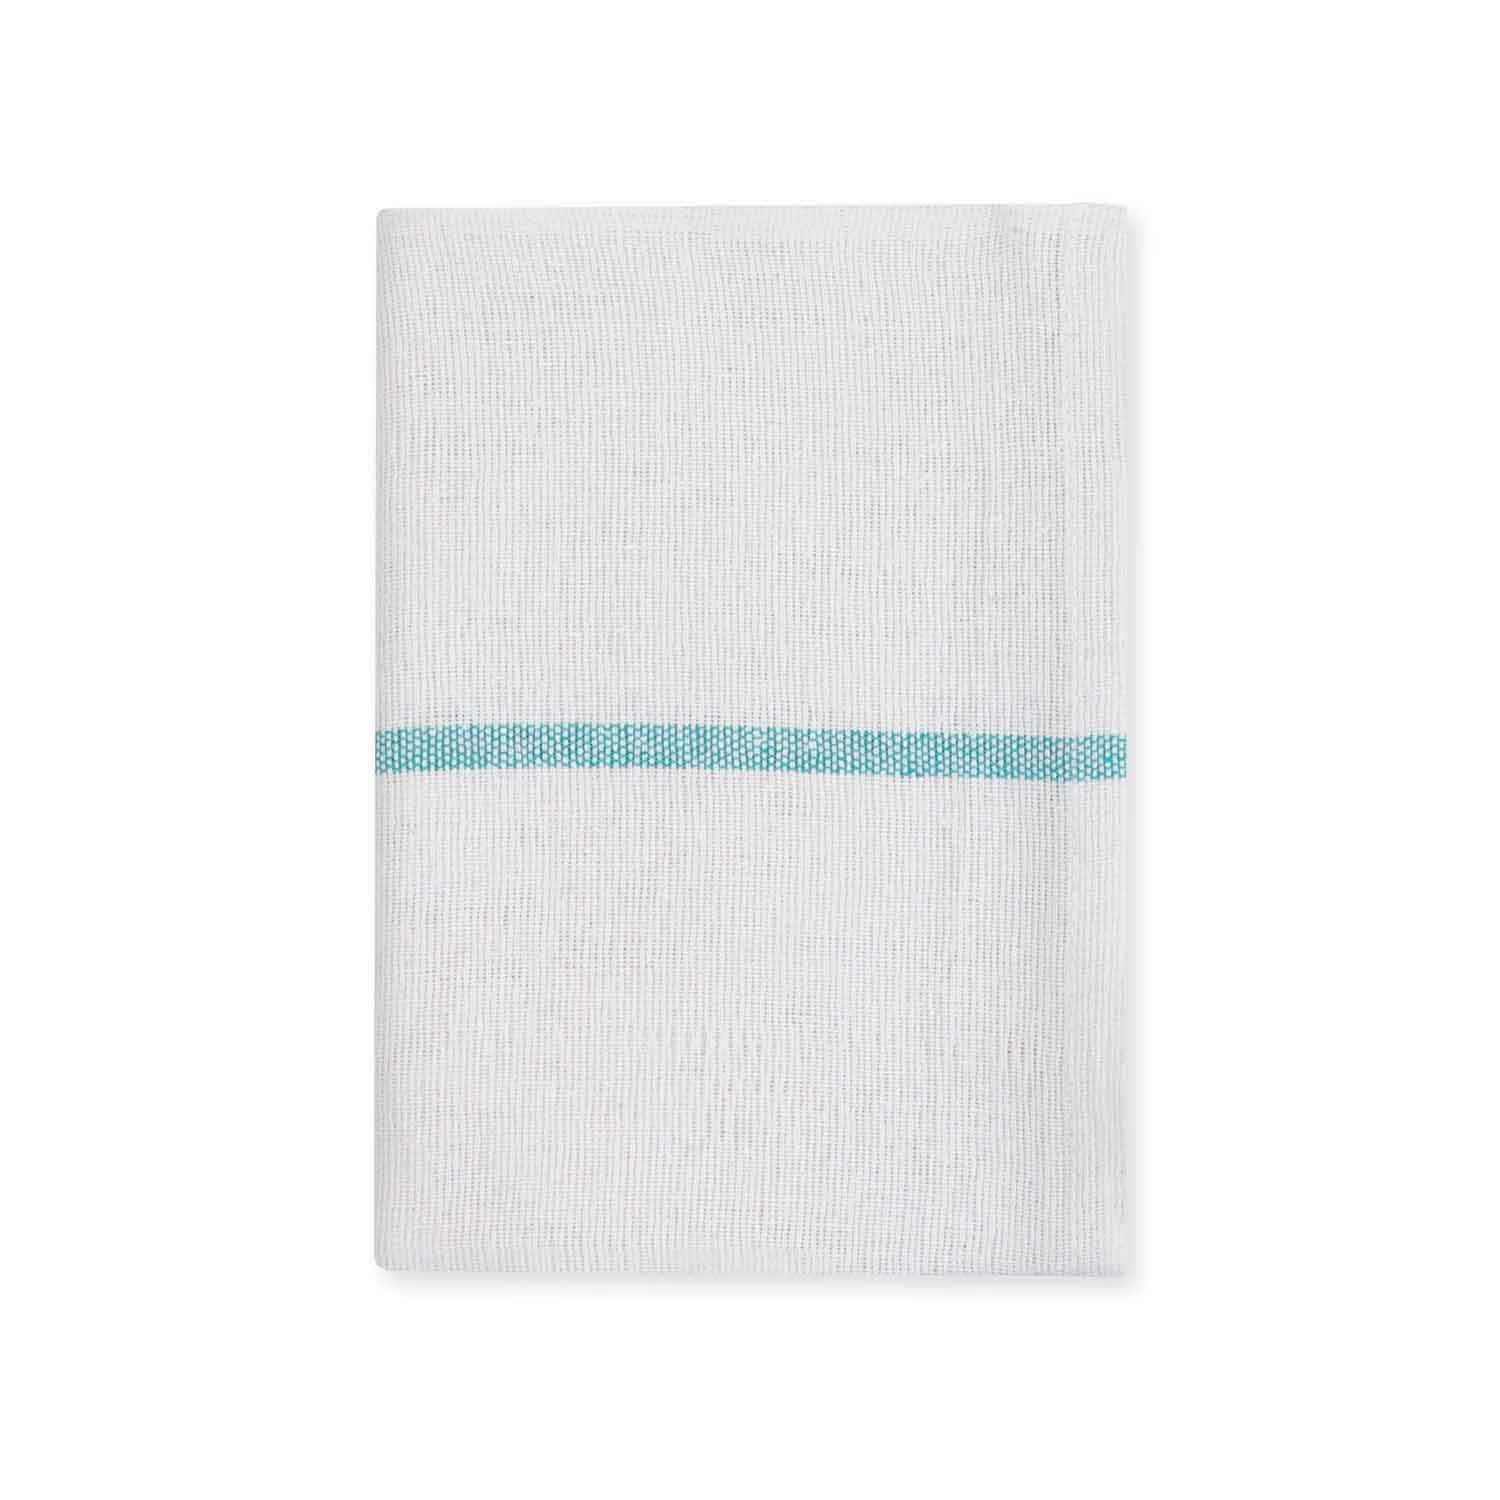 American Dawn | 30X36 Inch Osnaburg White With Green Border Dish Towel 